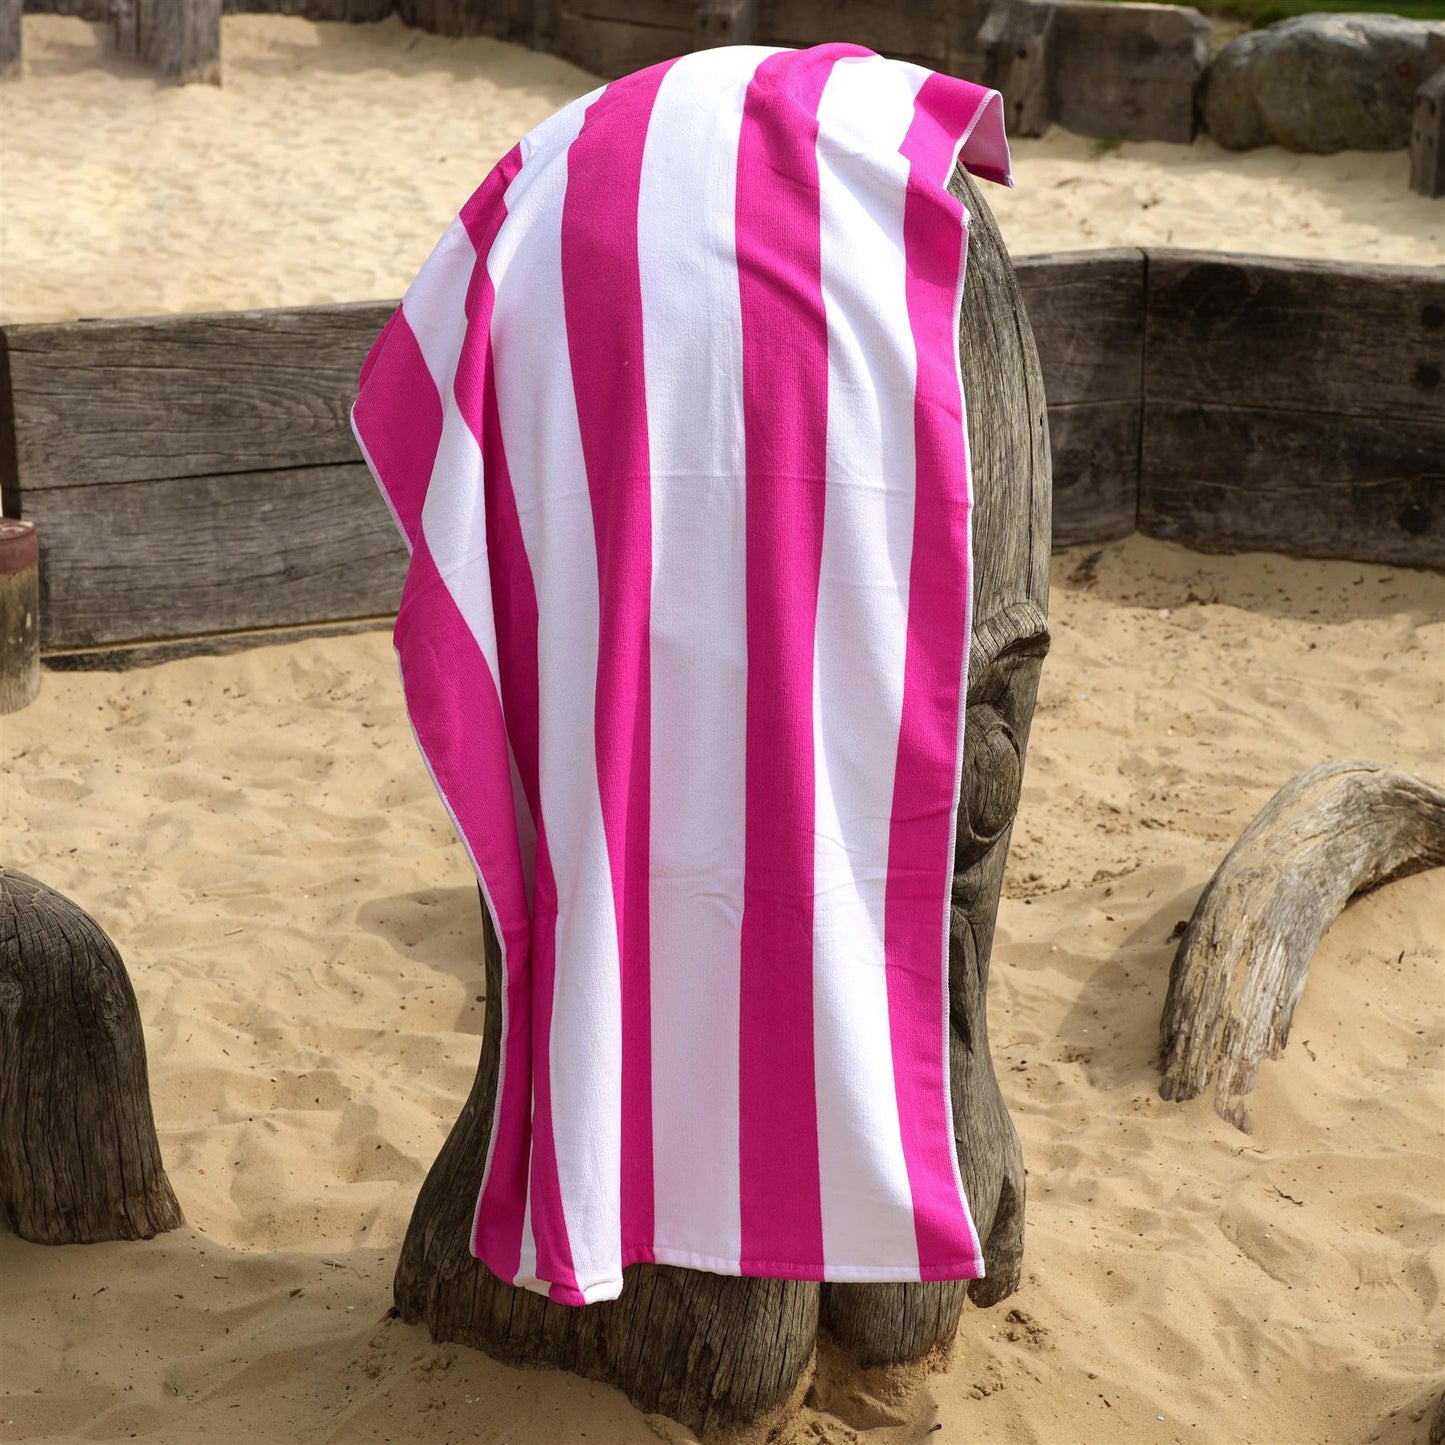 Beach Bath Towel Large Microfibre Pink Striped by GEEZY - UKBuyZone